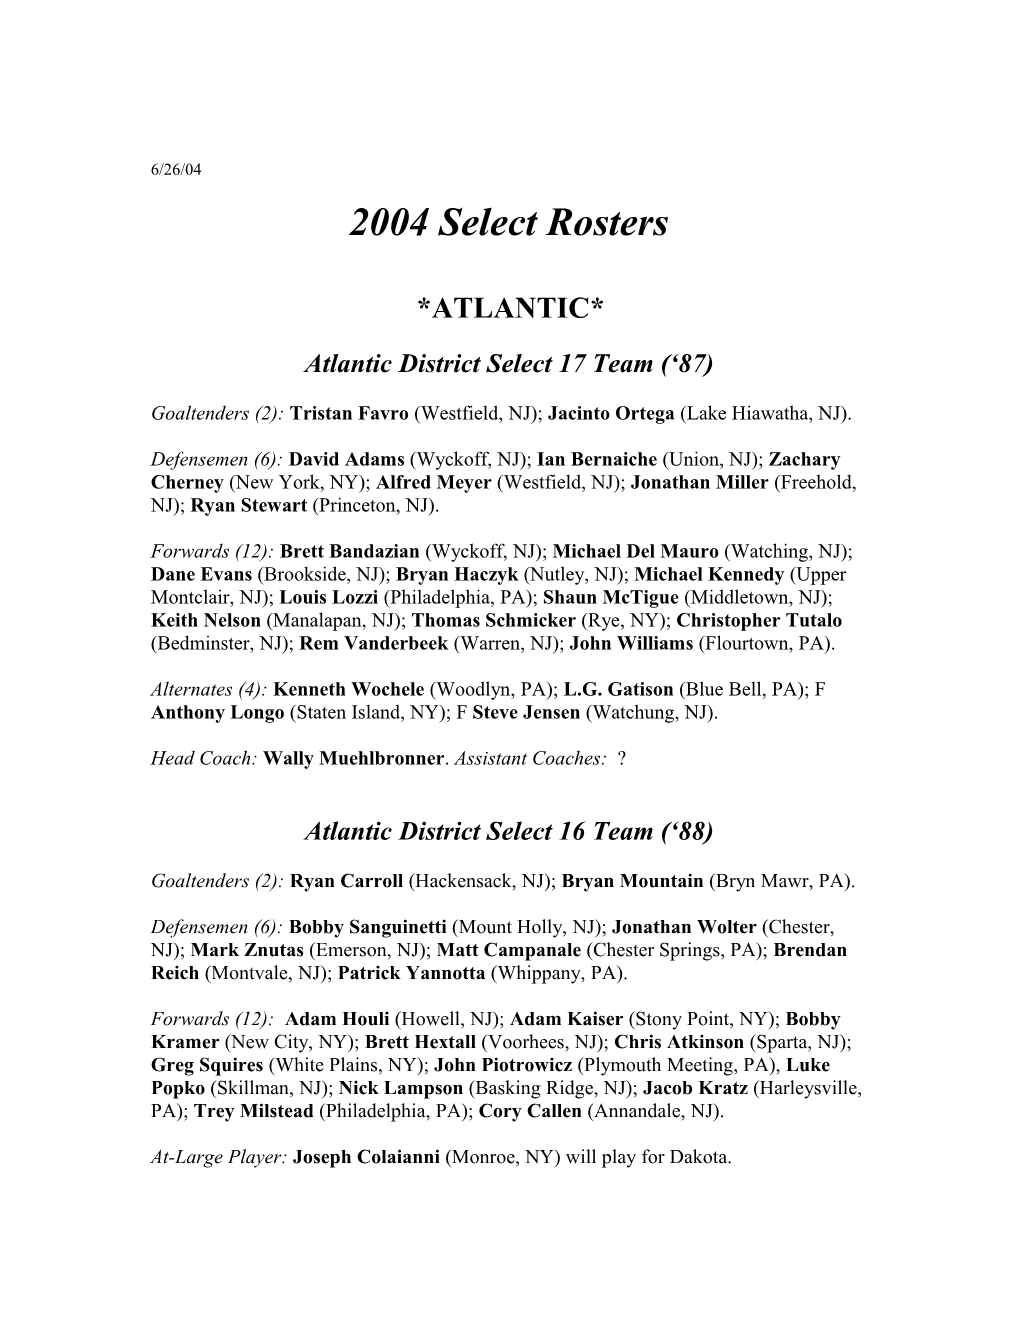 Atlantic District Select 17 Team ( 87)